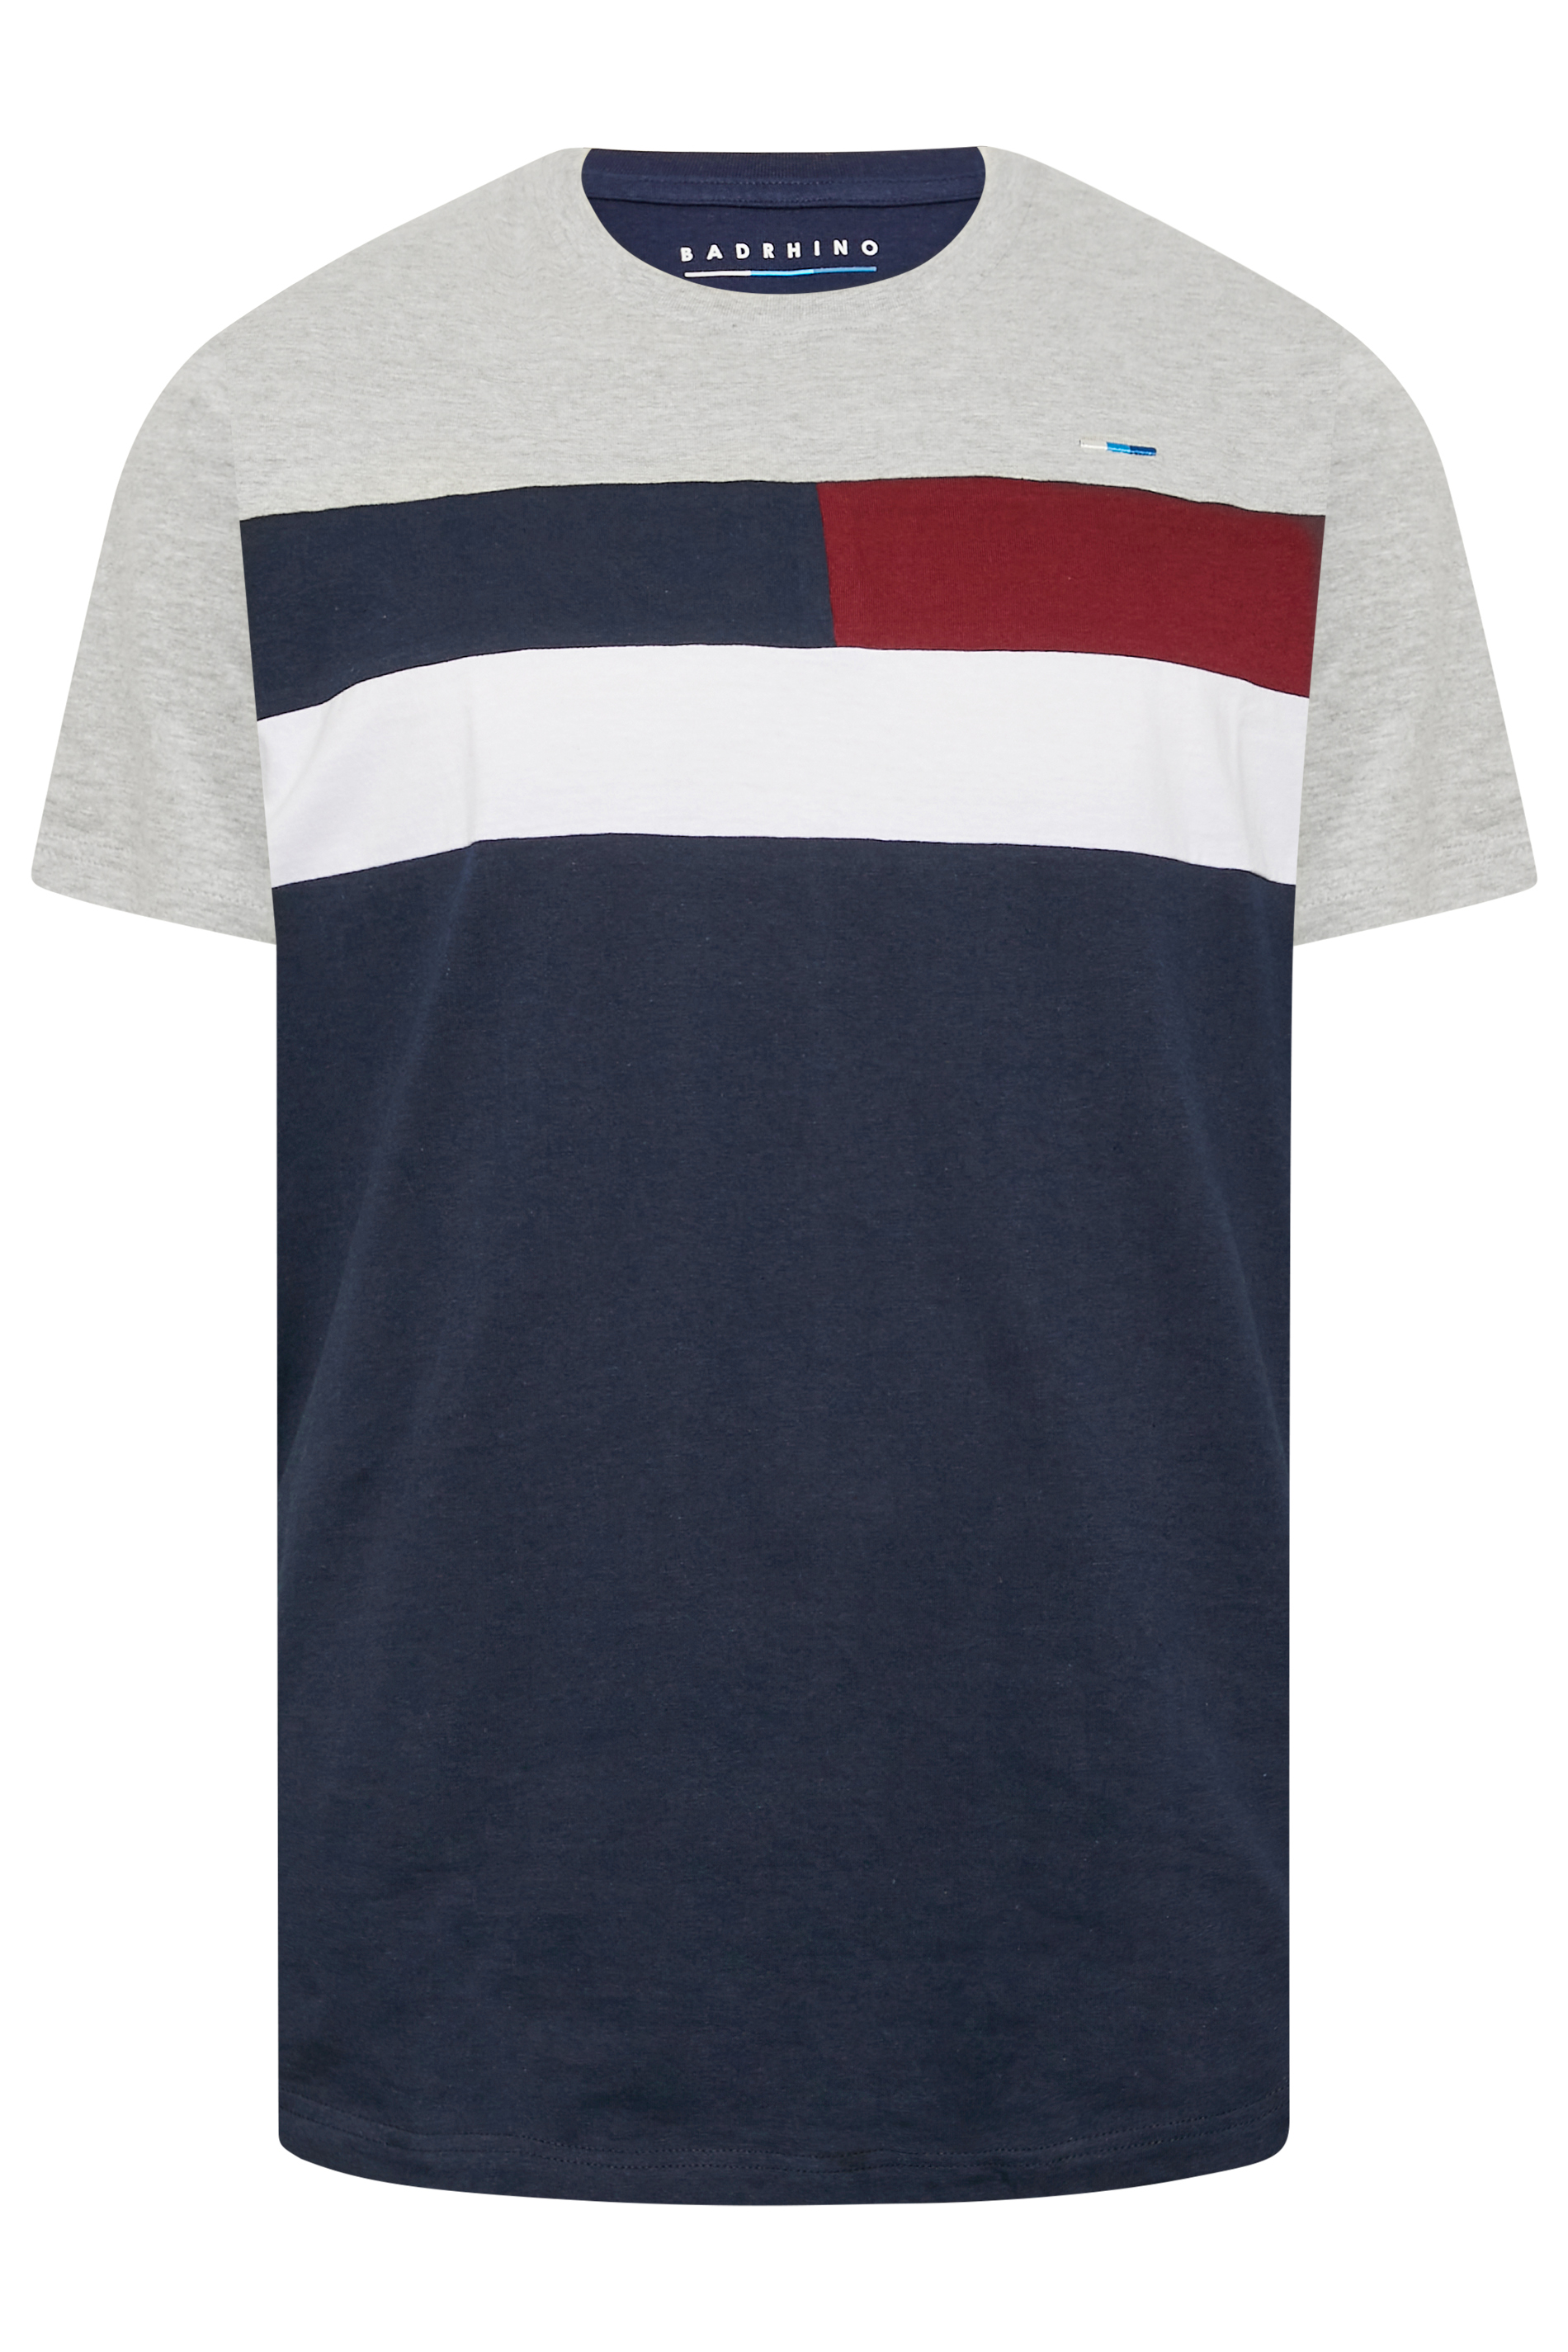 BadRhino Big & Tall Grey & Navy Cut & Sew T-Shirt | BadRhino 3